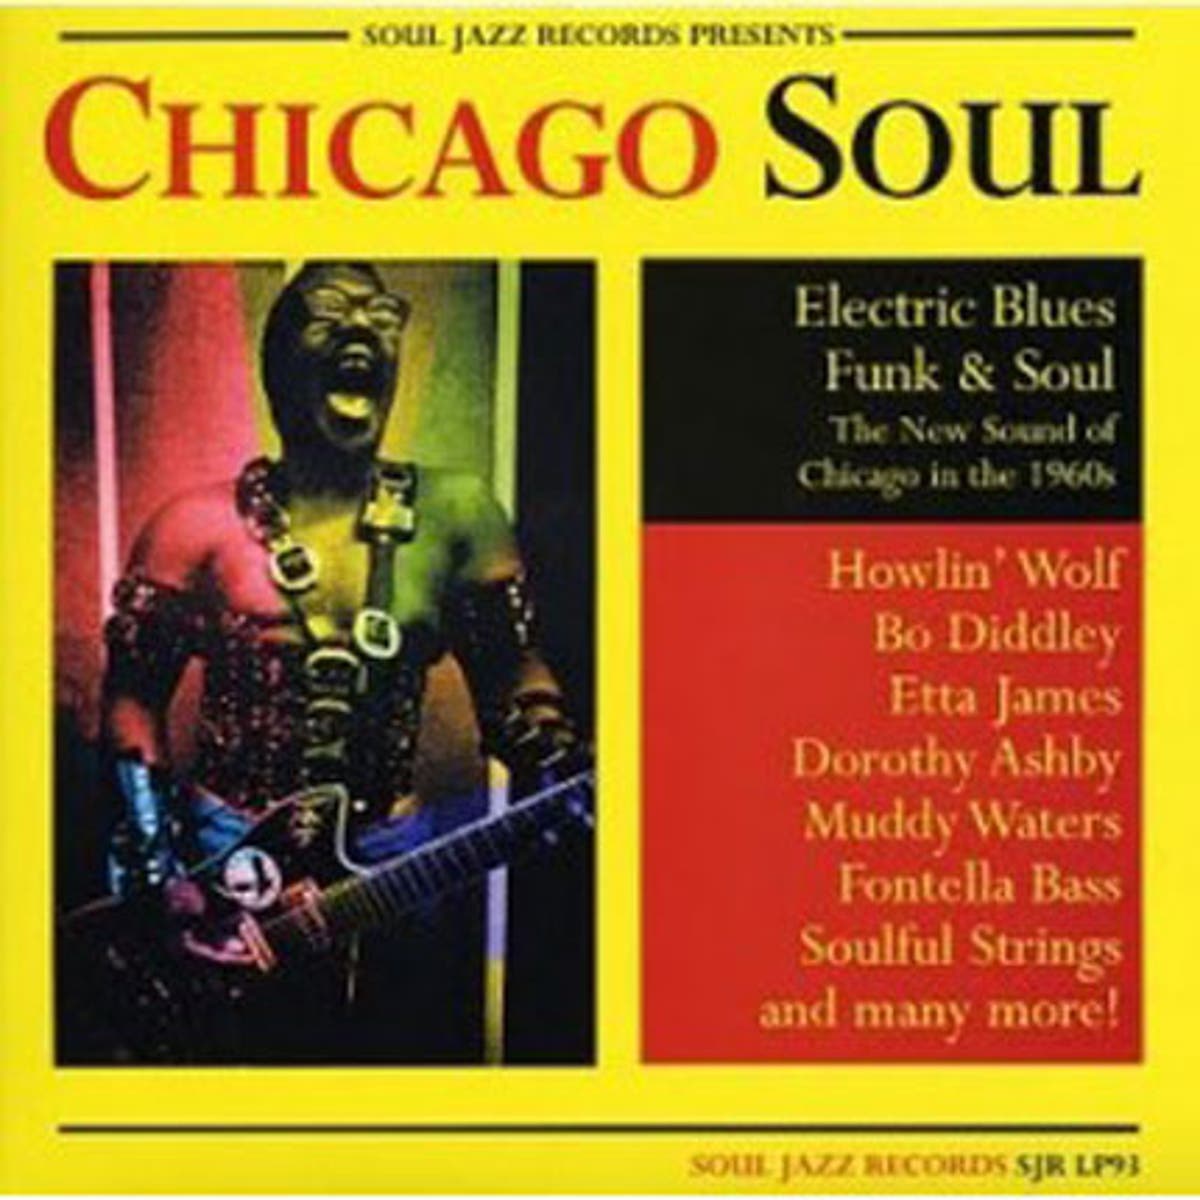 Album Various artists, Chicago Soul (Soul Jazz Records